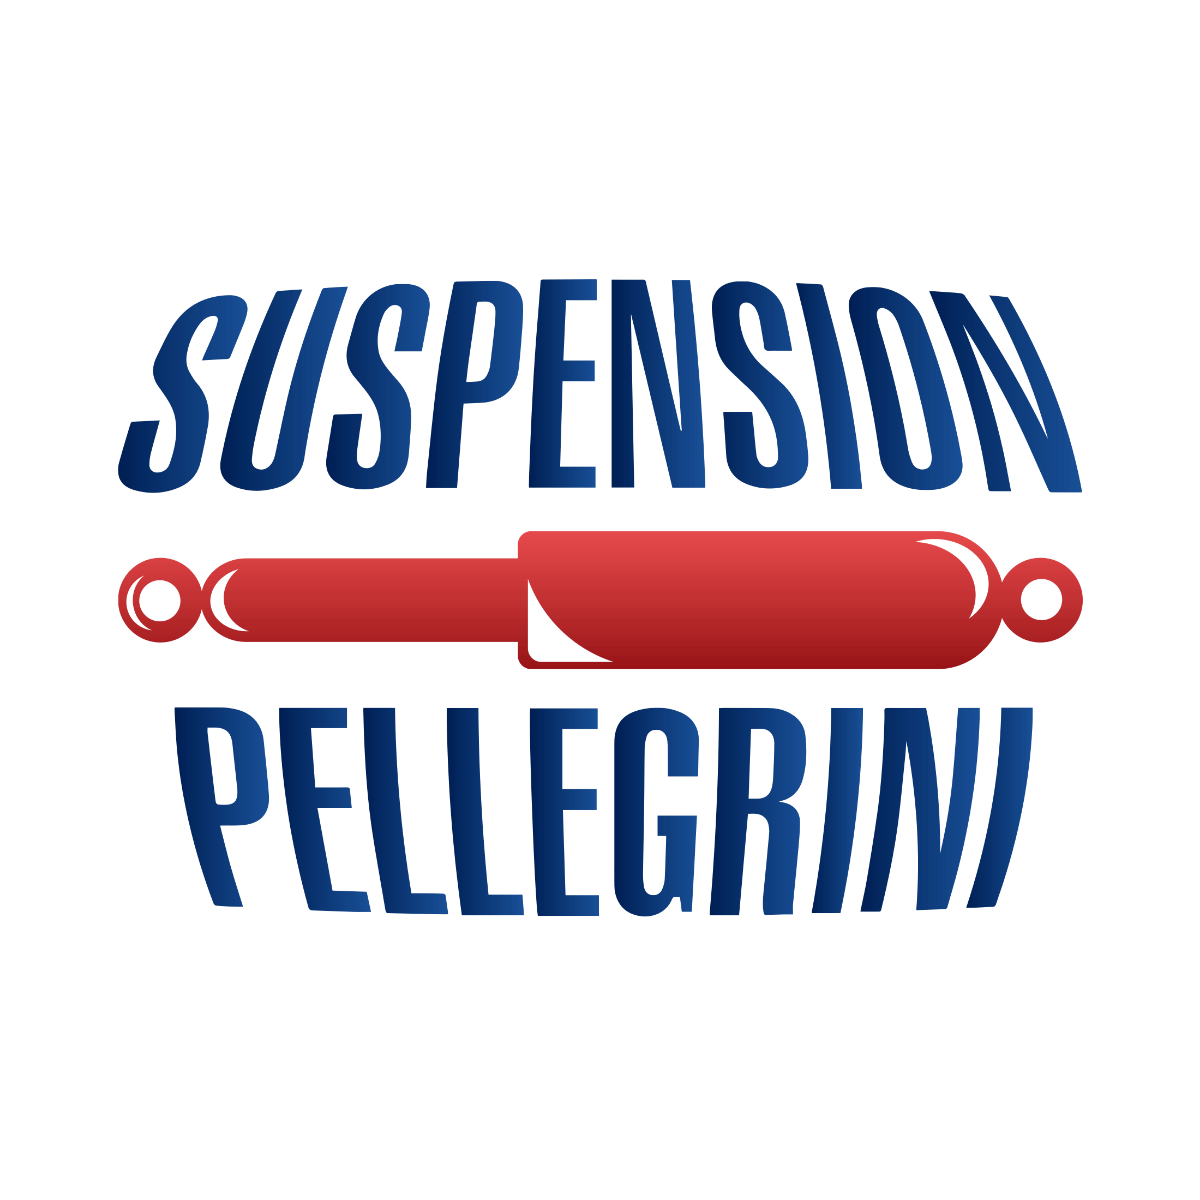 Suspensión Pellegrini